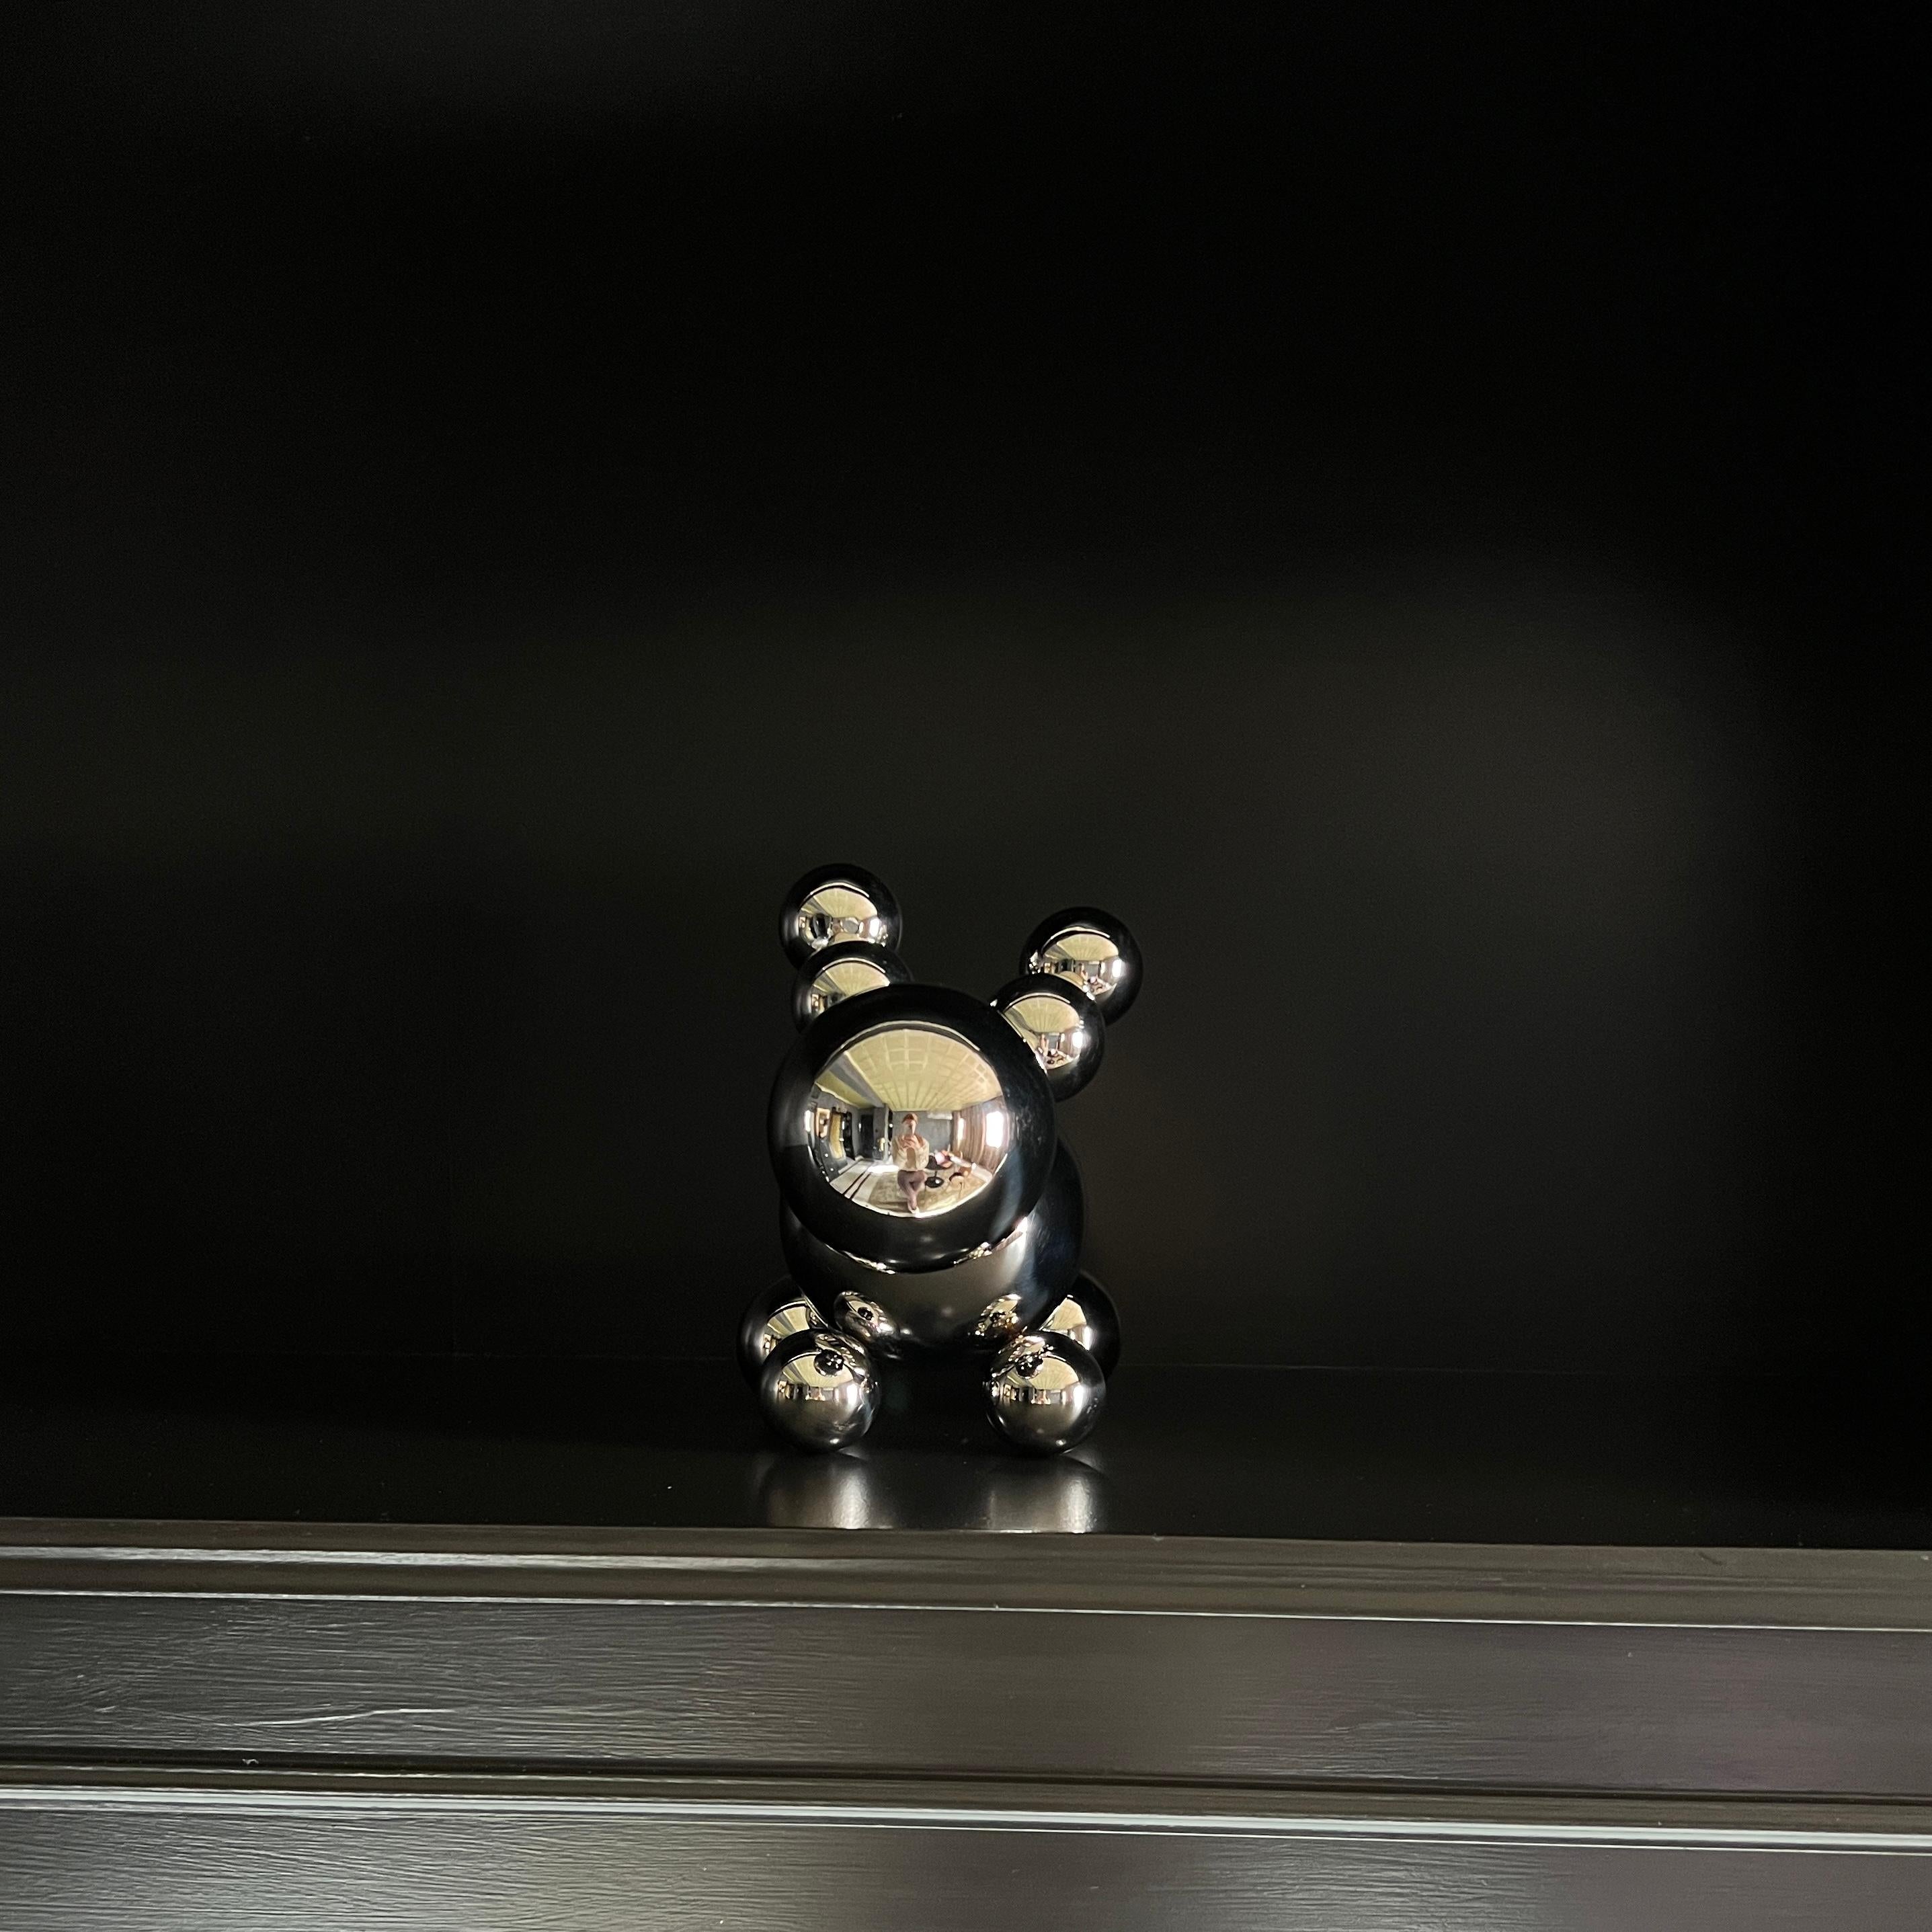 Stainless Steel Rabbit Bunny Robot 'Wait...' Minimalistic Art 5